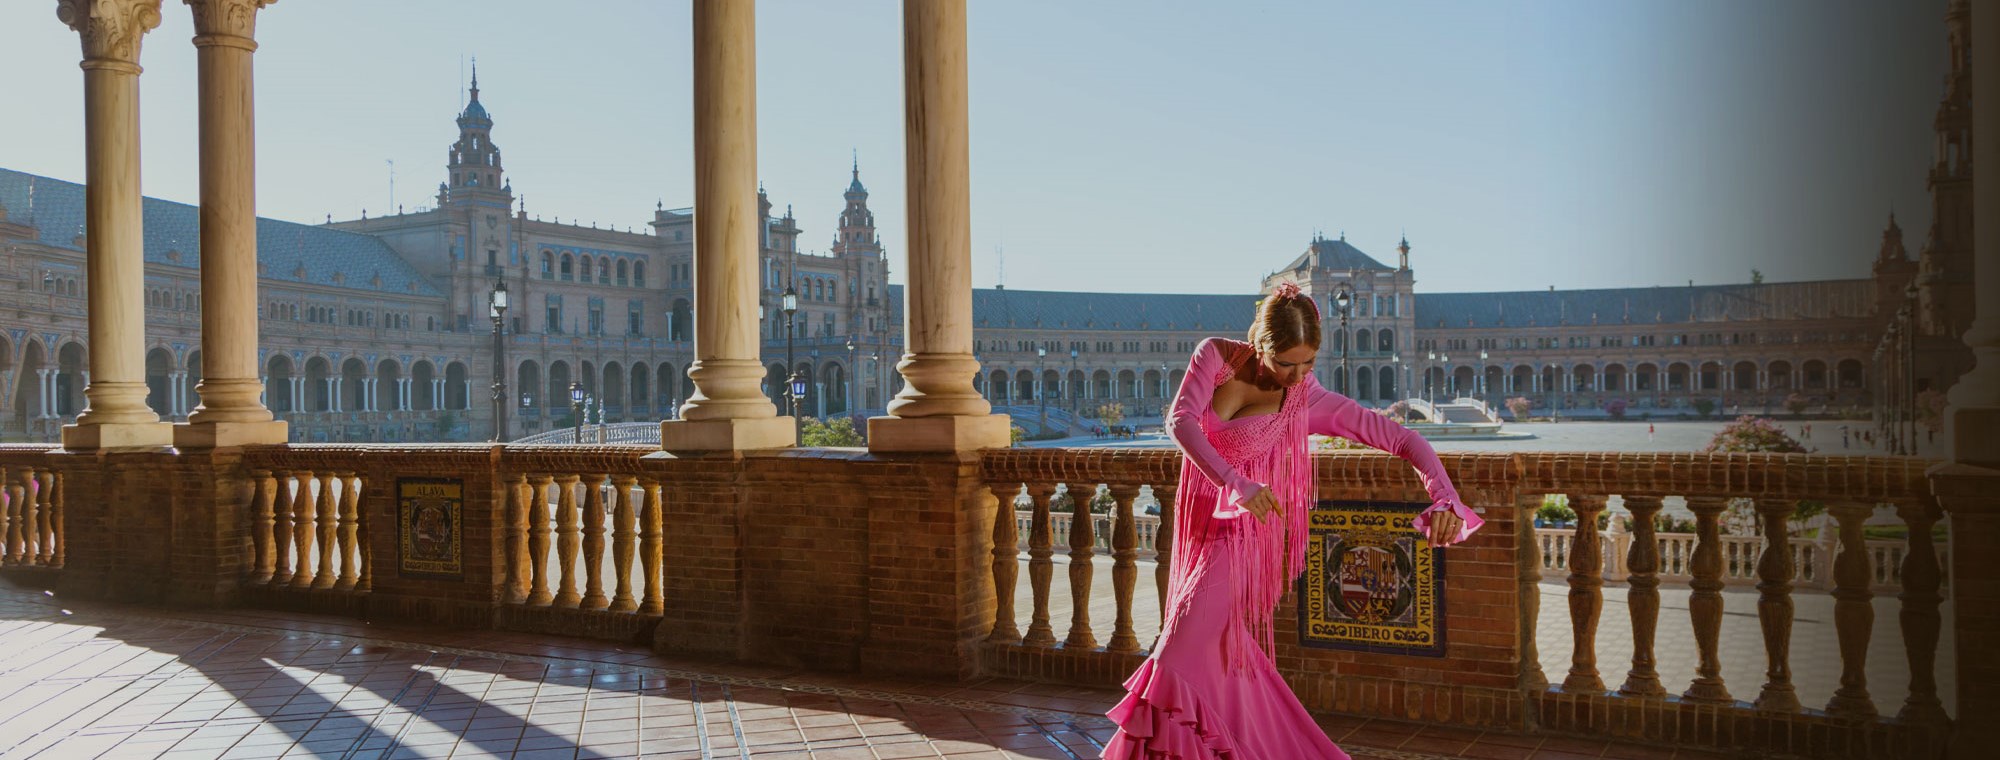 Spain Seville Plaza Espana Flamenco Dancer In Pink Dress